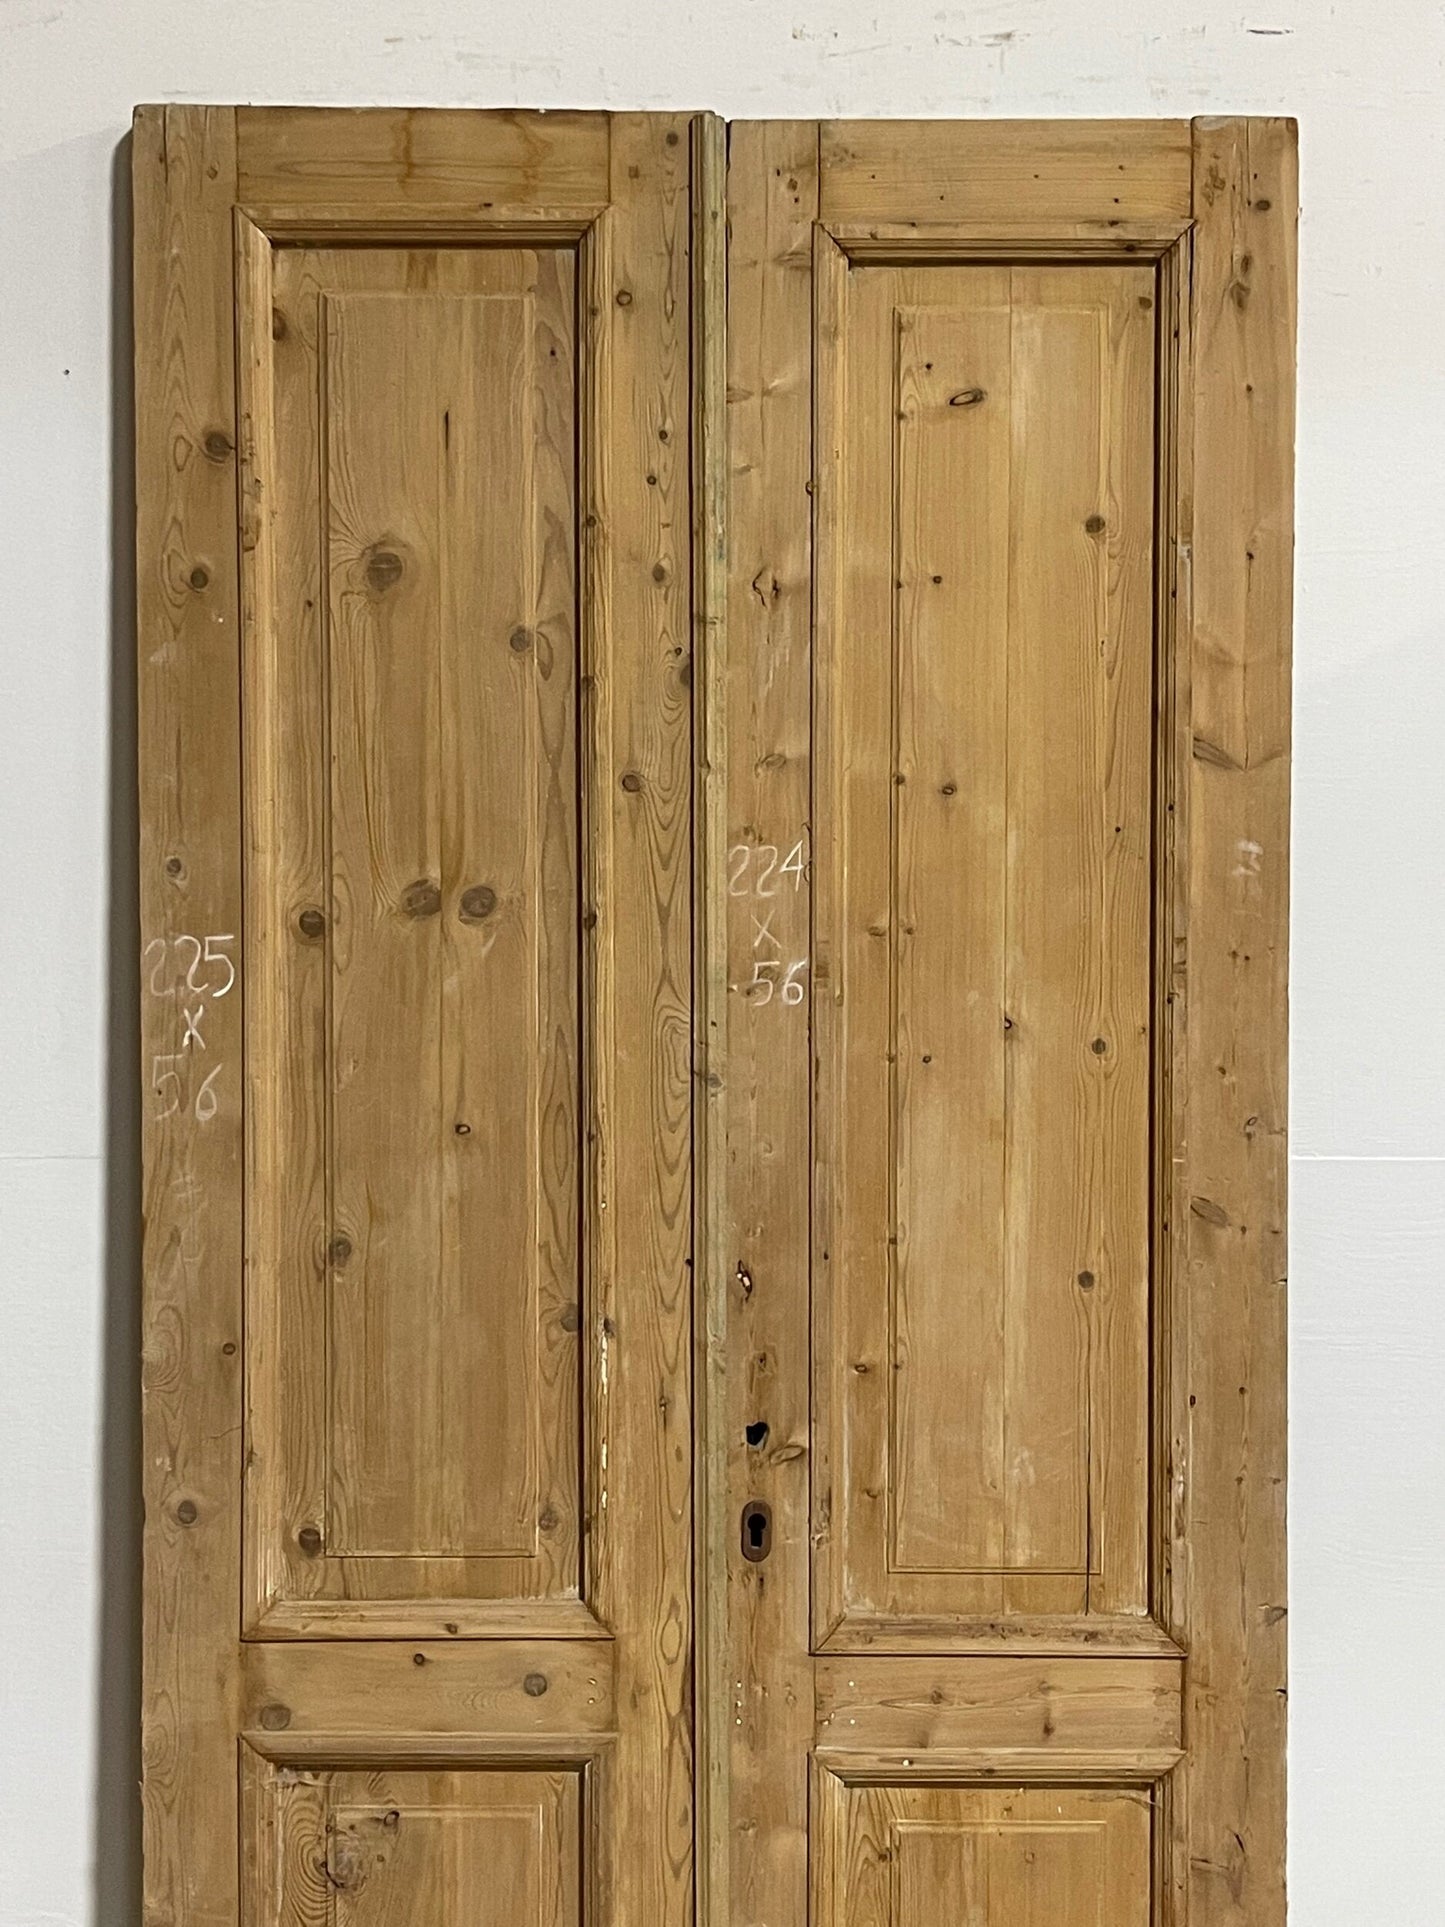 Antique French panel doors (88x44) H0049s